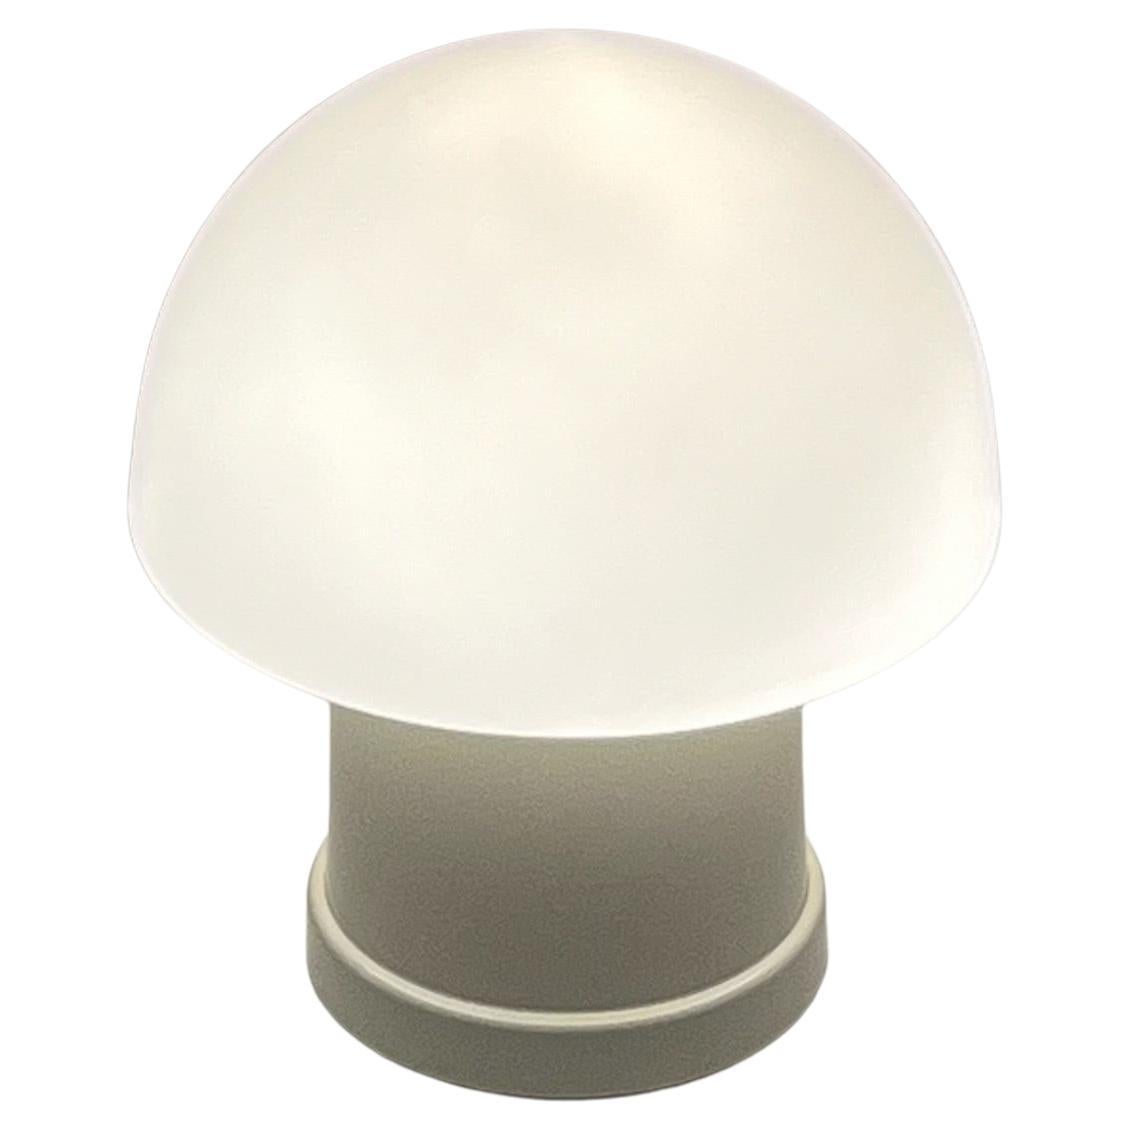 70s Space Age Mushroom Lamp - Iconic Design Charm by Massive Belgium